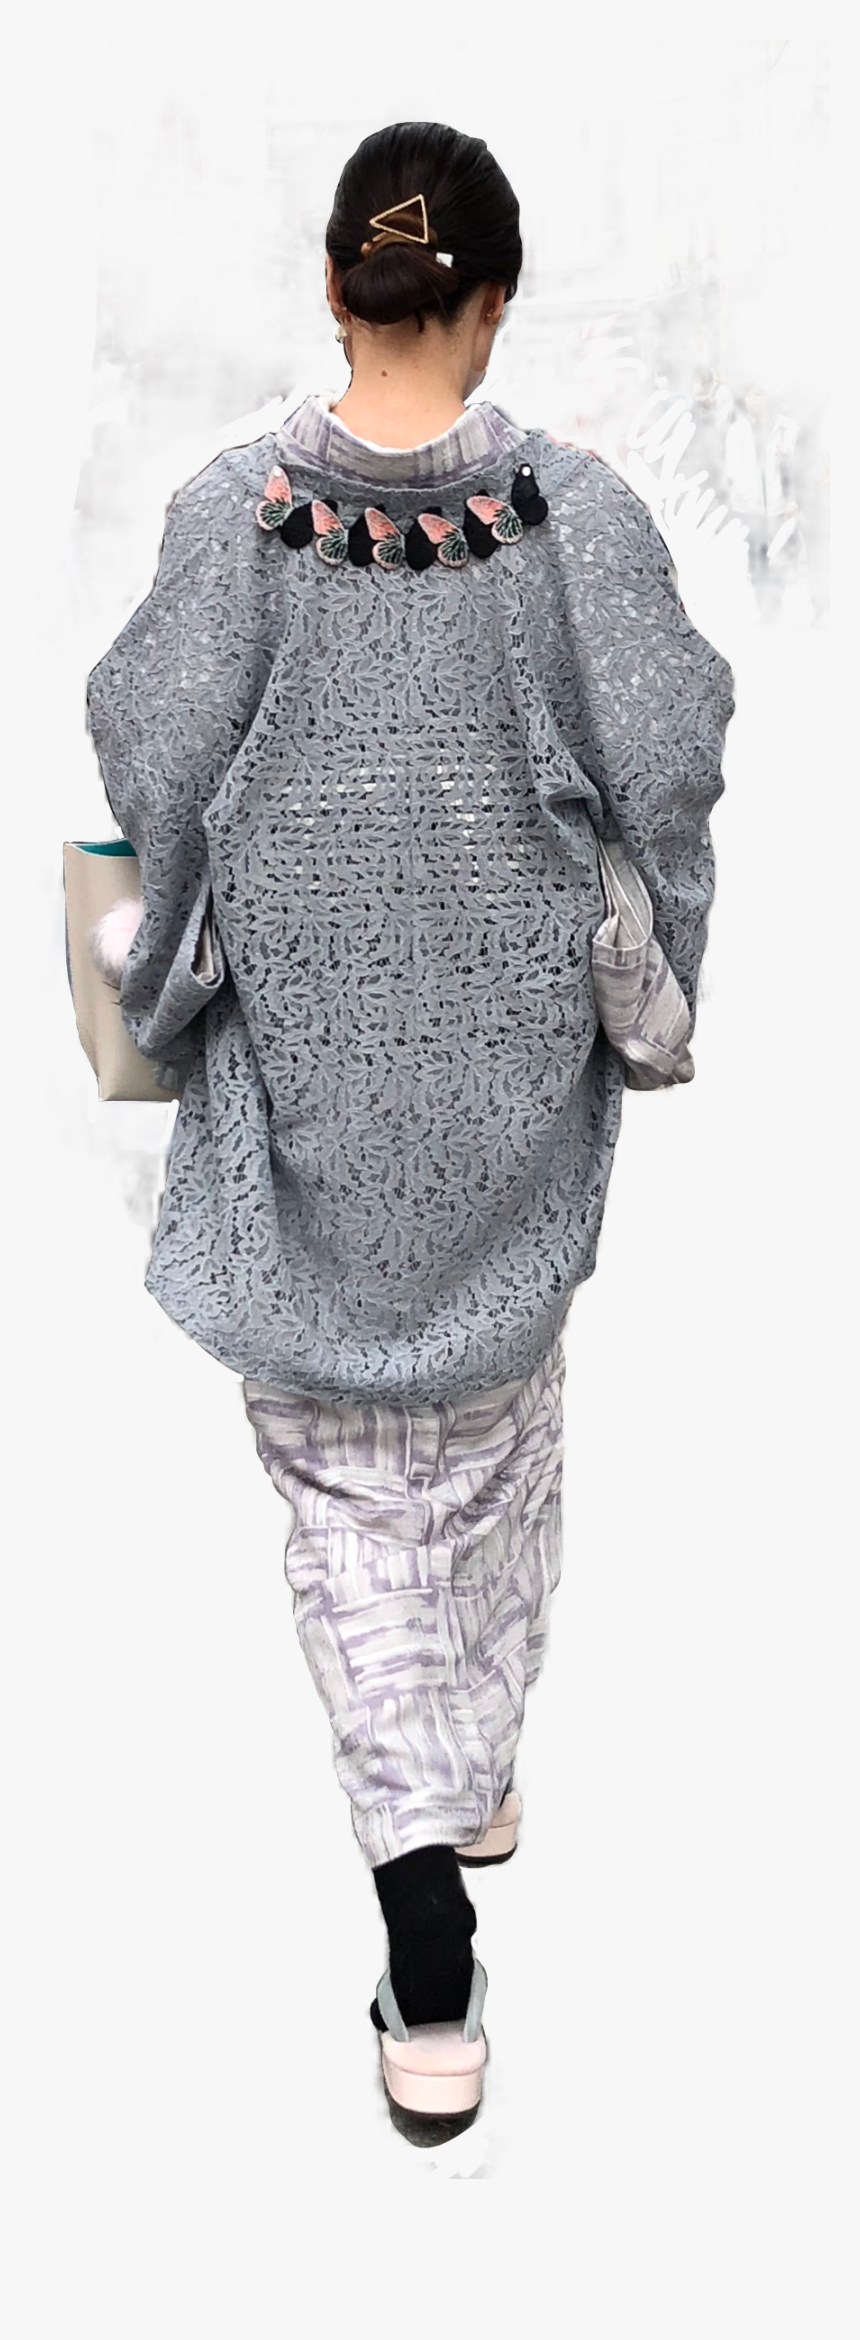 Transparent Woman Walking Silhouette Png - Cardigan, Png Download, Free Download